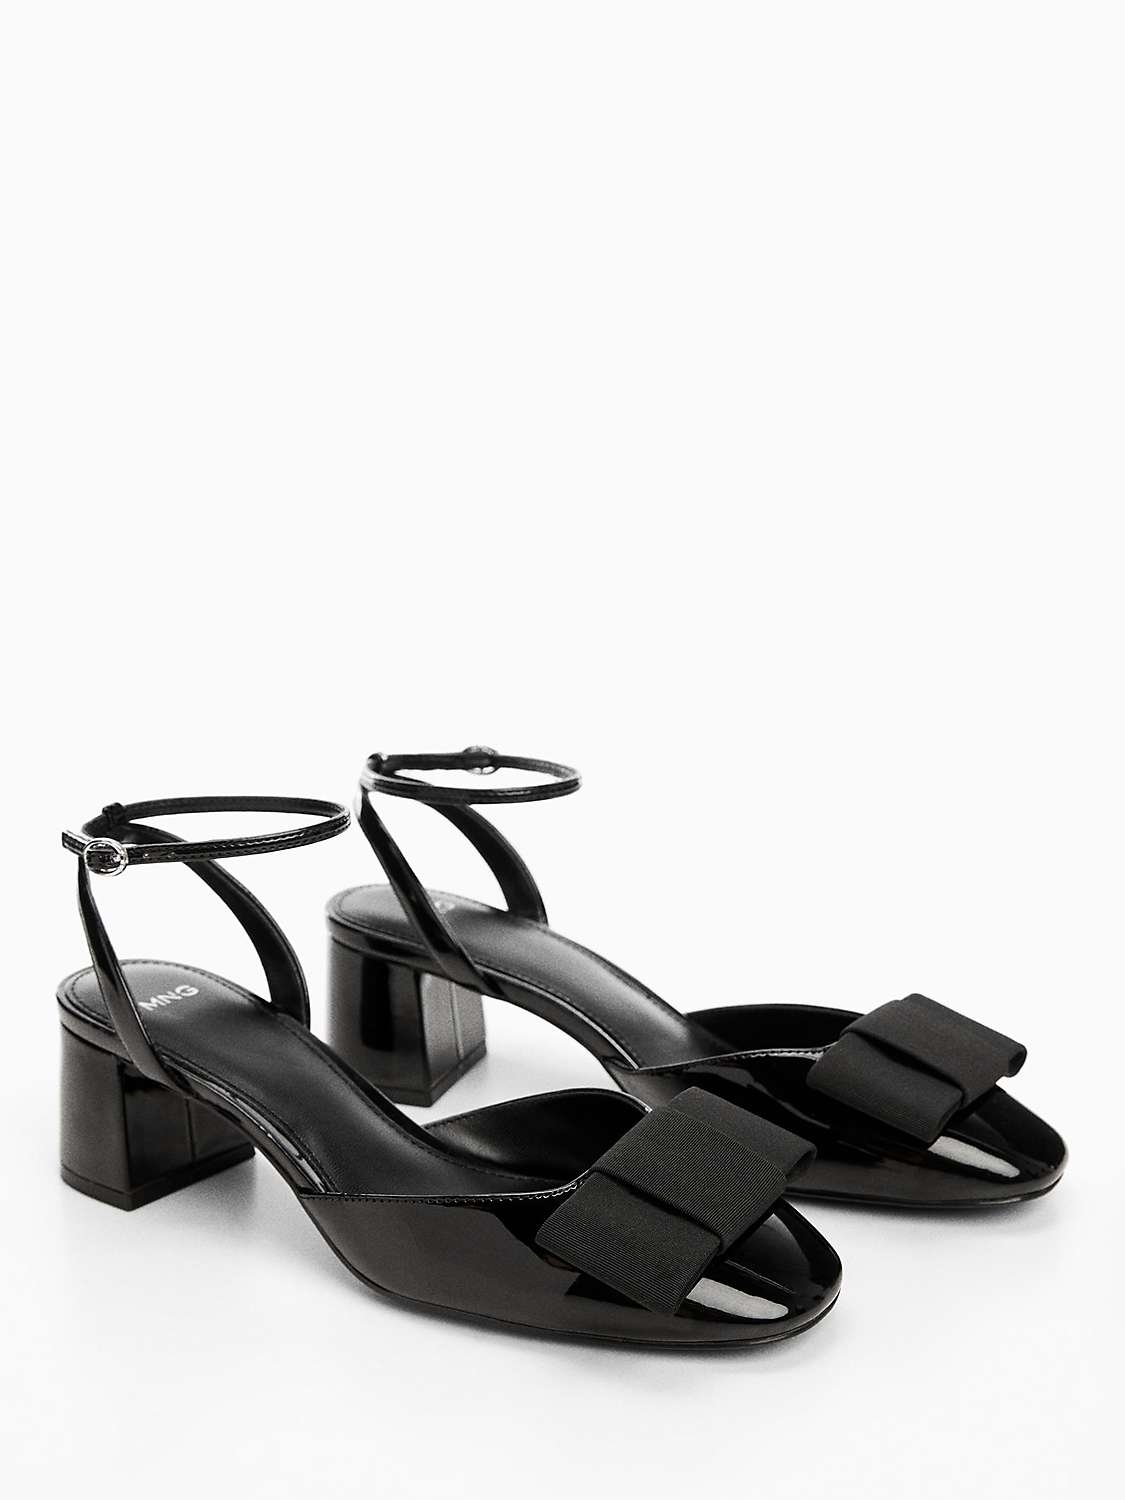 Buy Mango Megan Patent Bow Shoes, Black Online at johnlewis.com